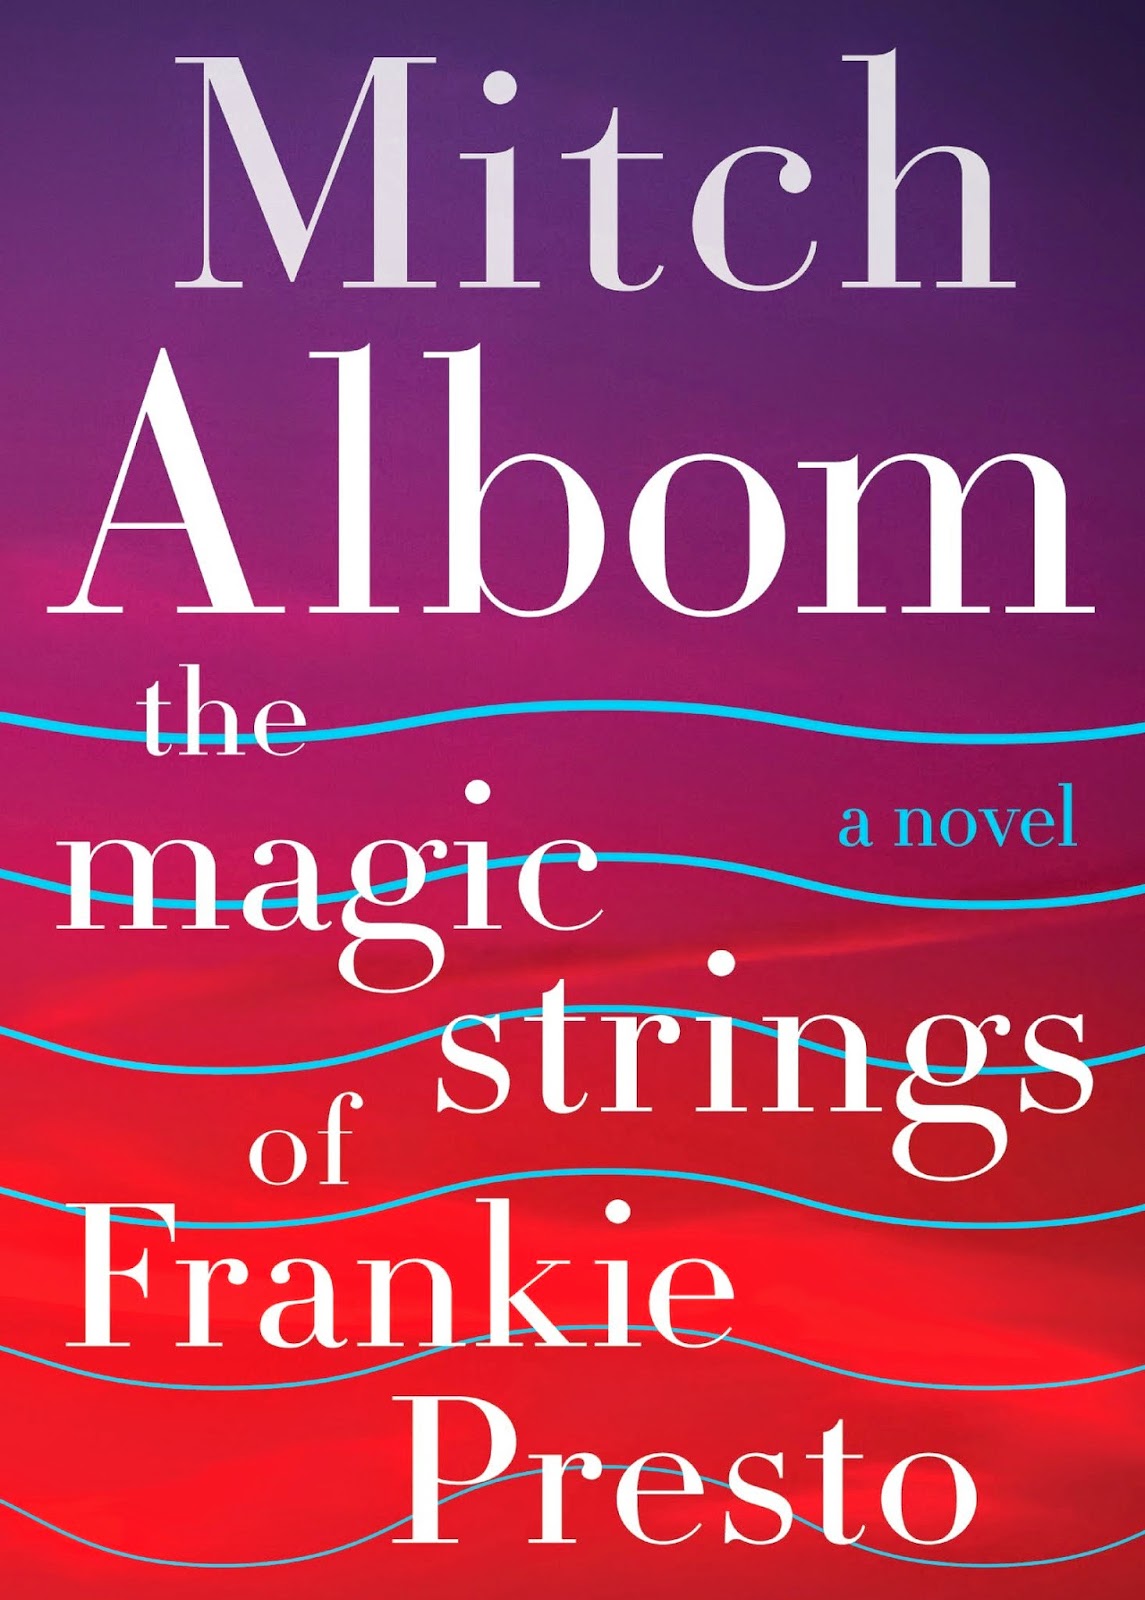 The Magic Strings of Frankie Presto by Mitch Albom